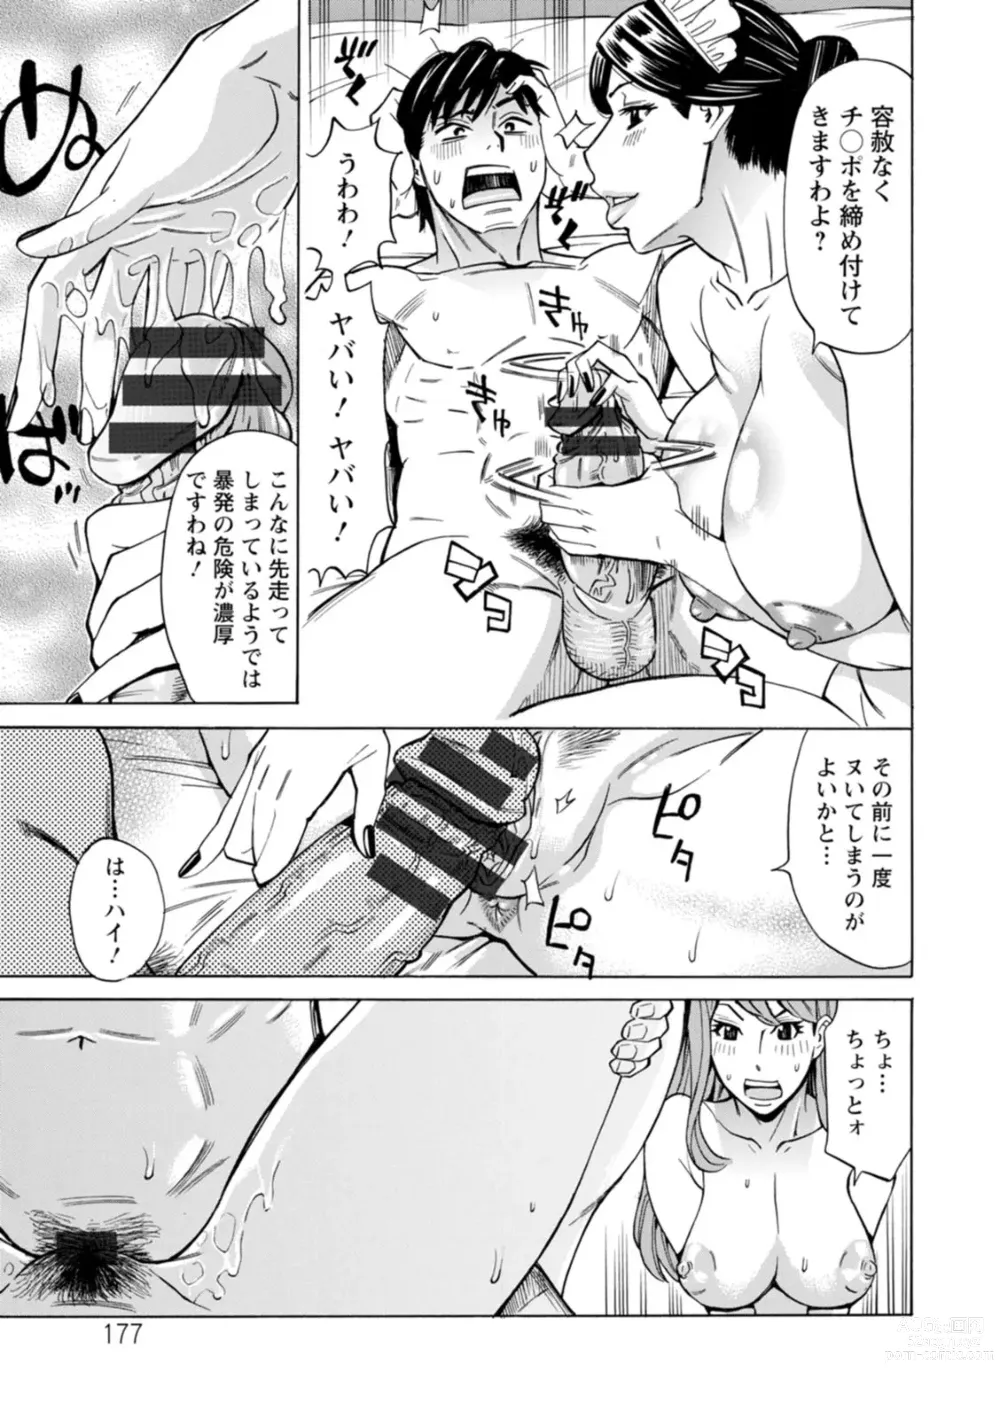 Page 177 of manga Furidashinimodoru - Back to Square One -